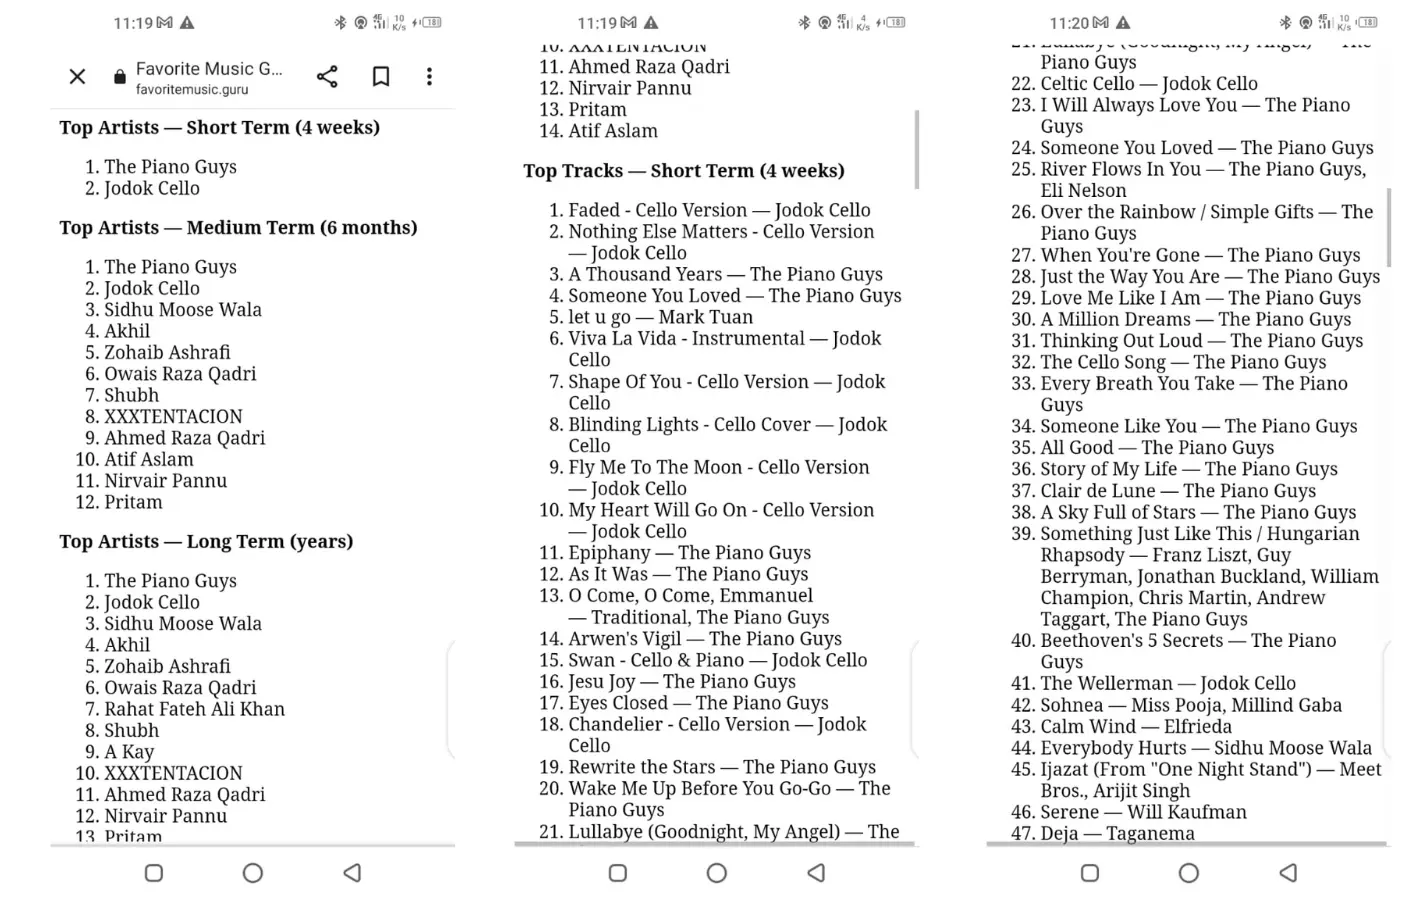 List of top music gurus on Spotify